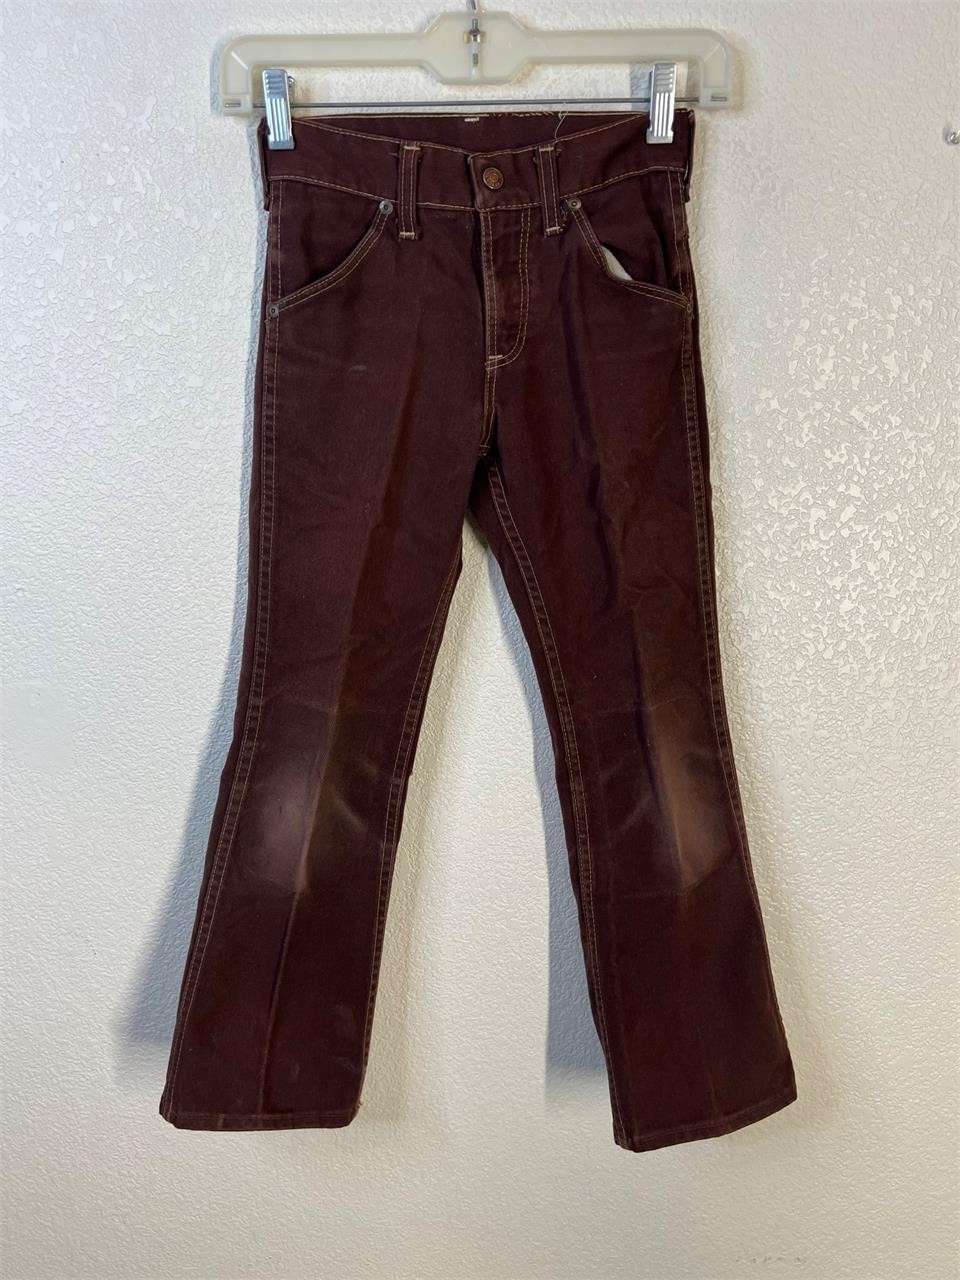 Vintage Sears Perma Prest Pants